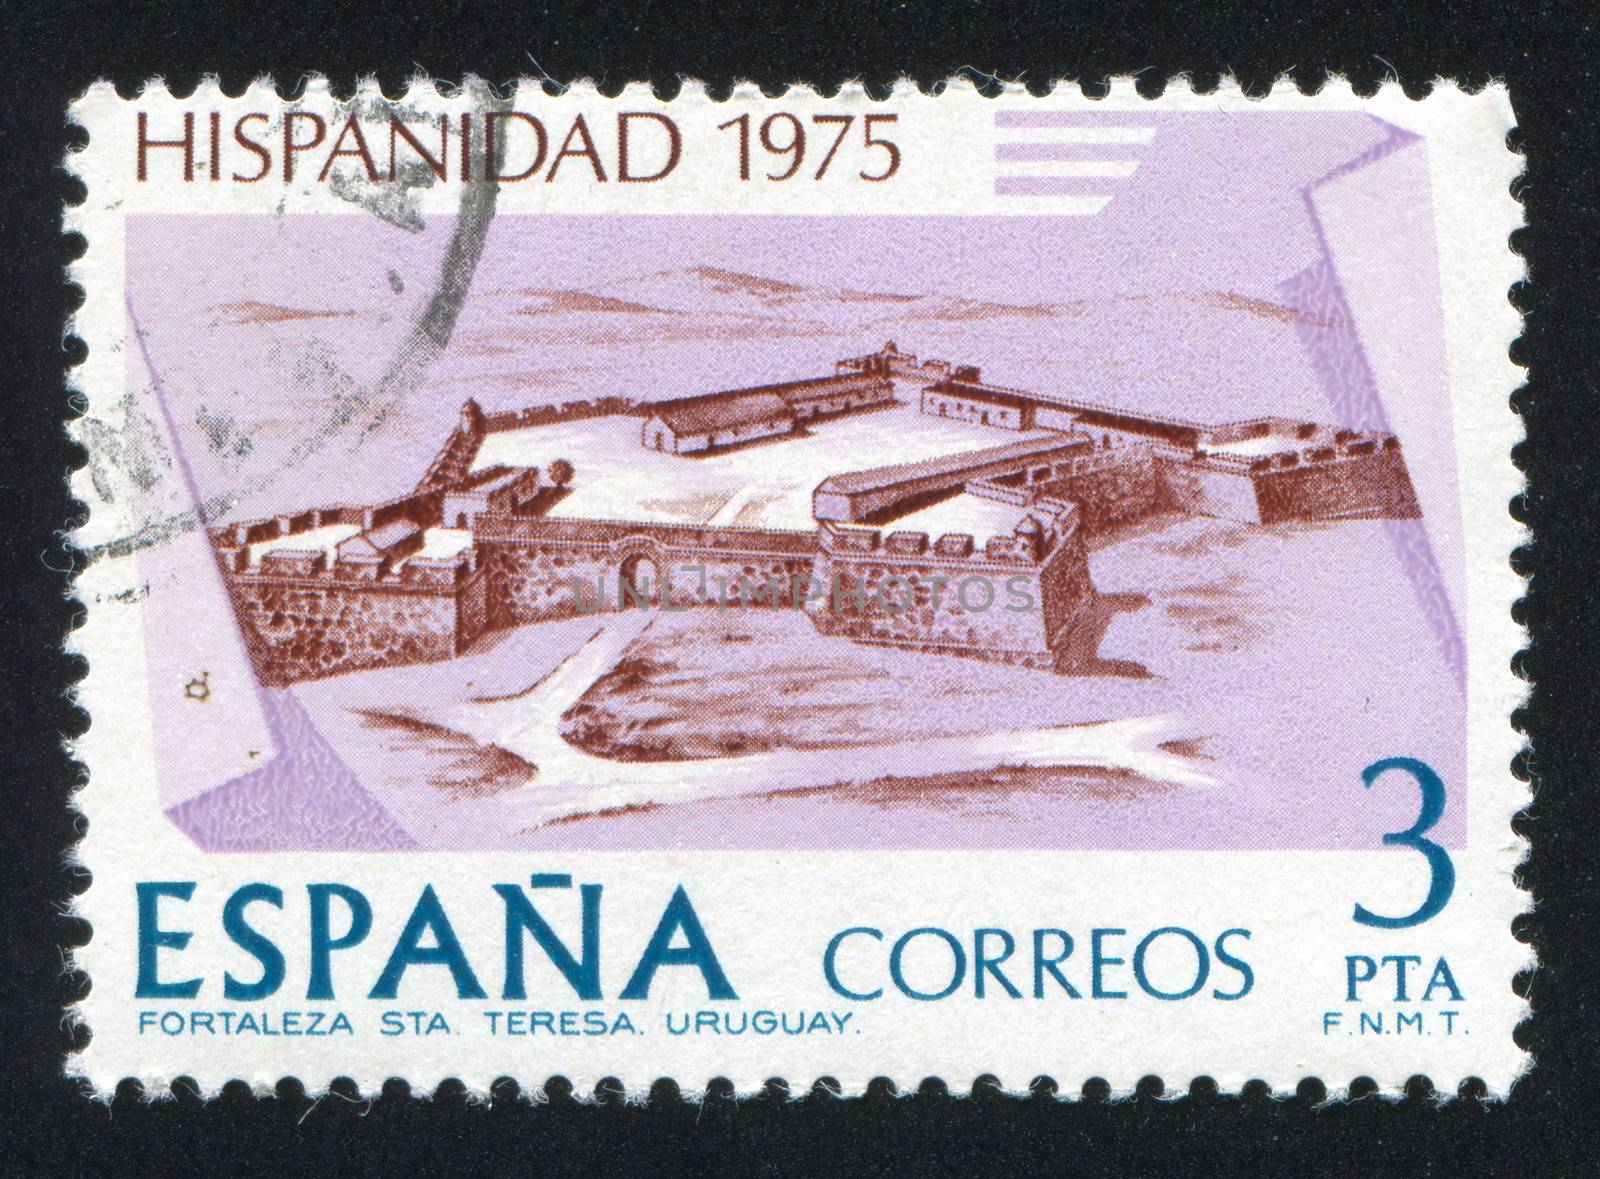 SPAIN - CIRCA 1975: stamp printed by Spain, shows Fortaleza Santa Tereza, circa 1975